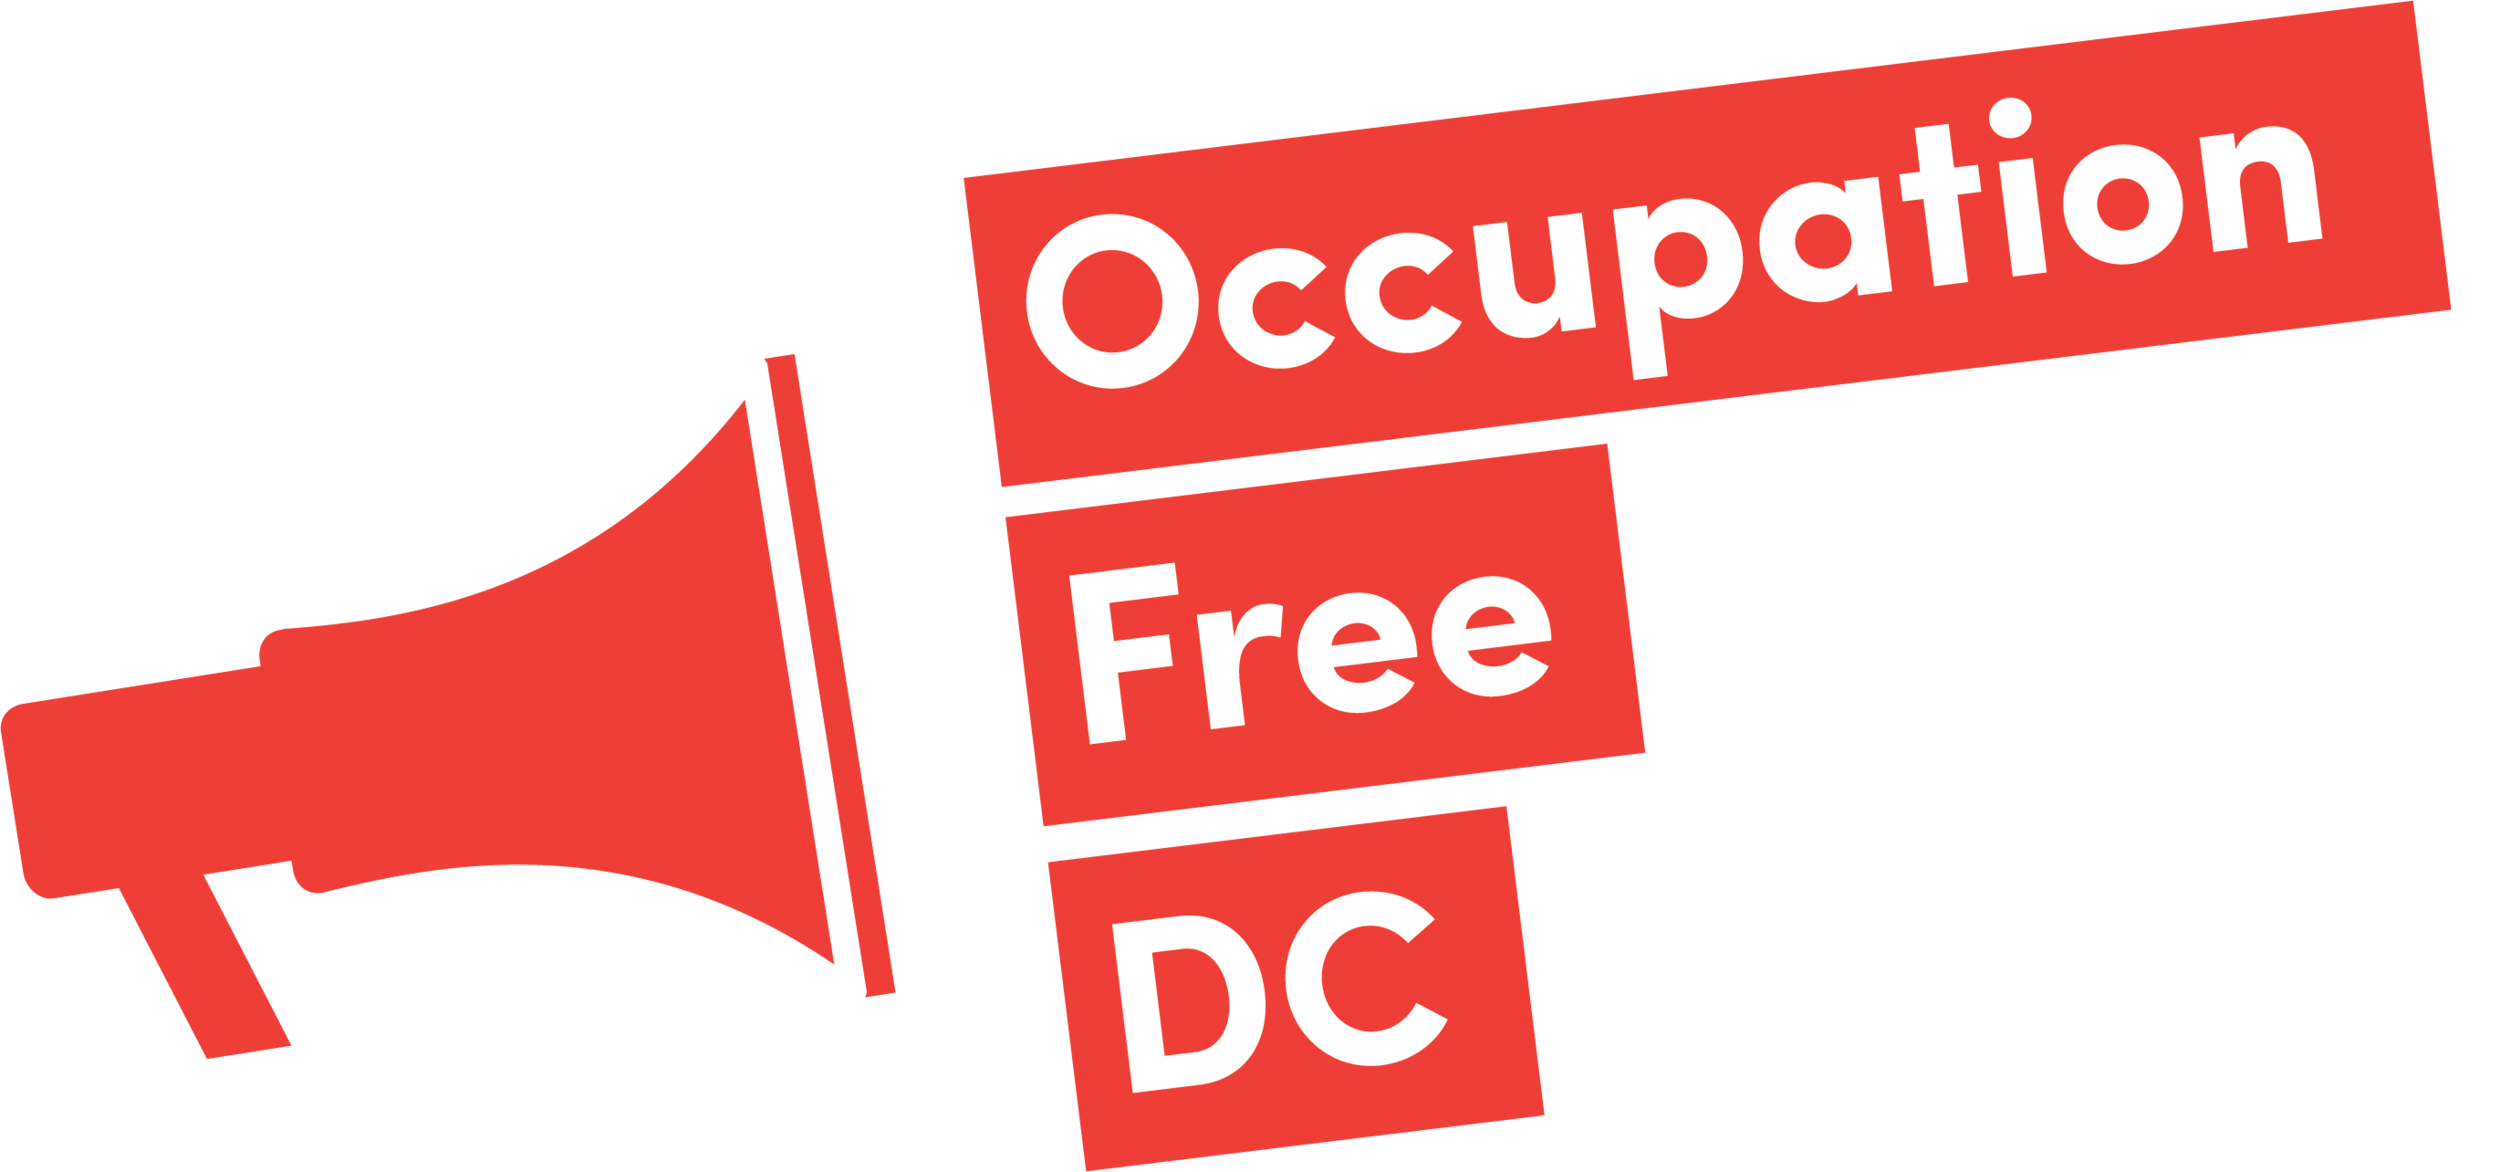 Occupation Free DC